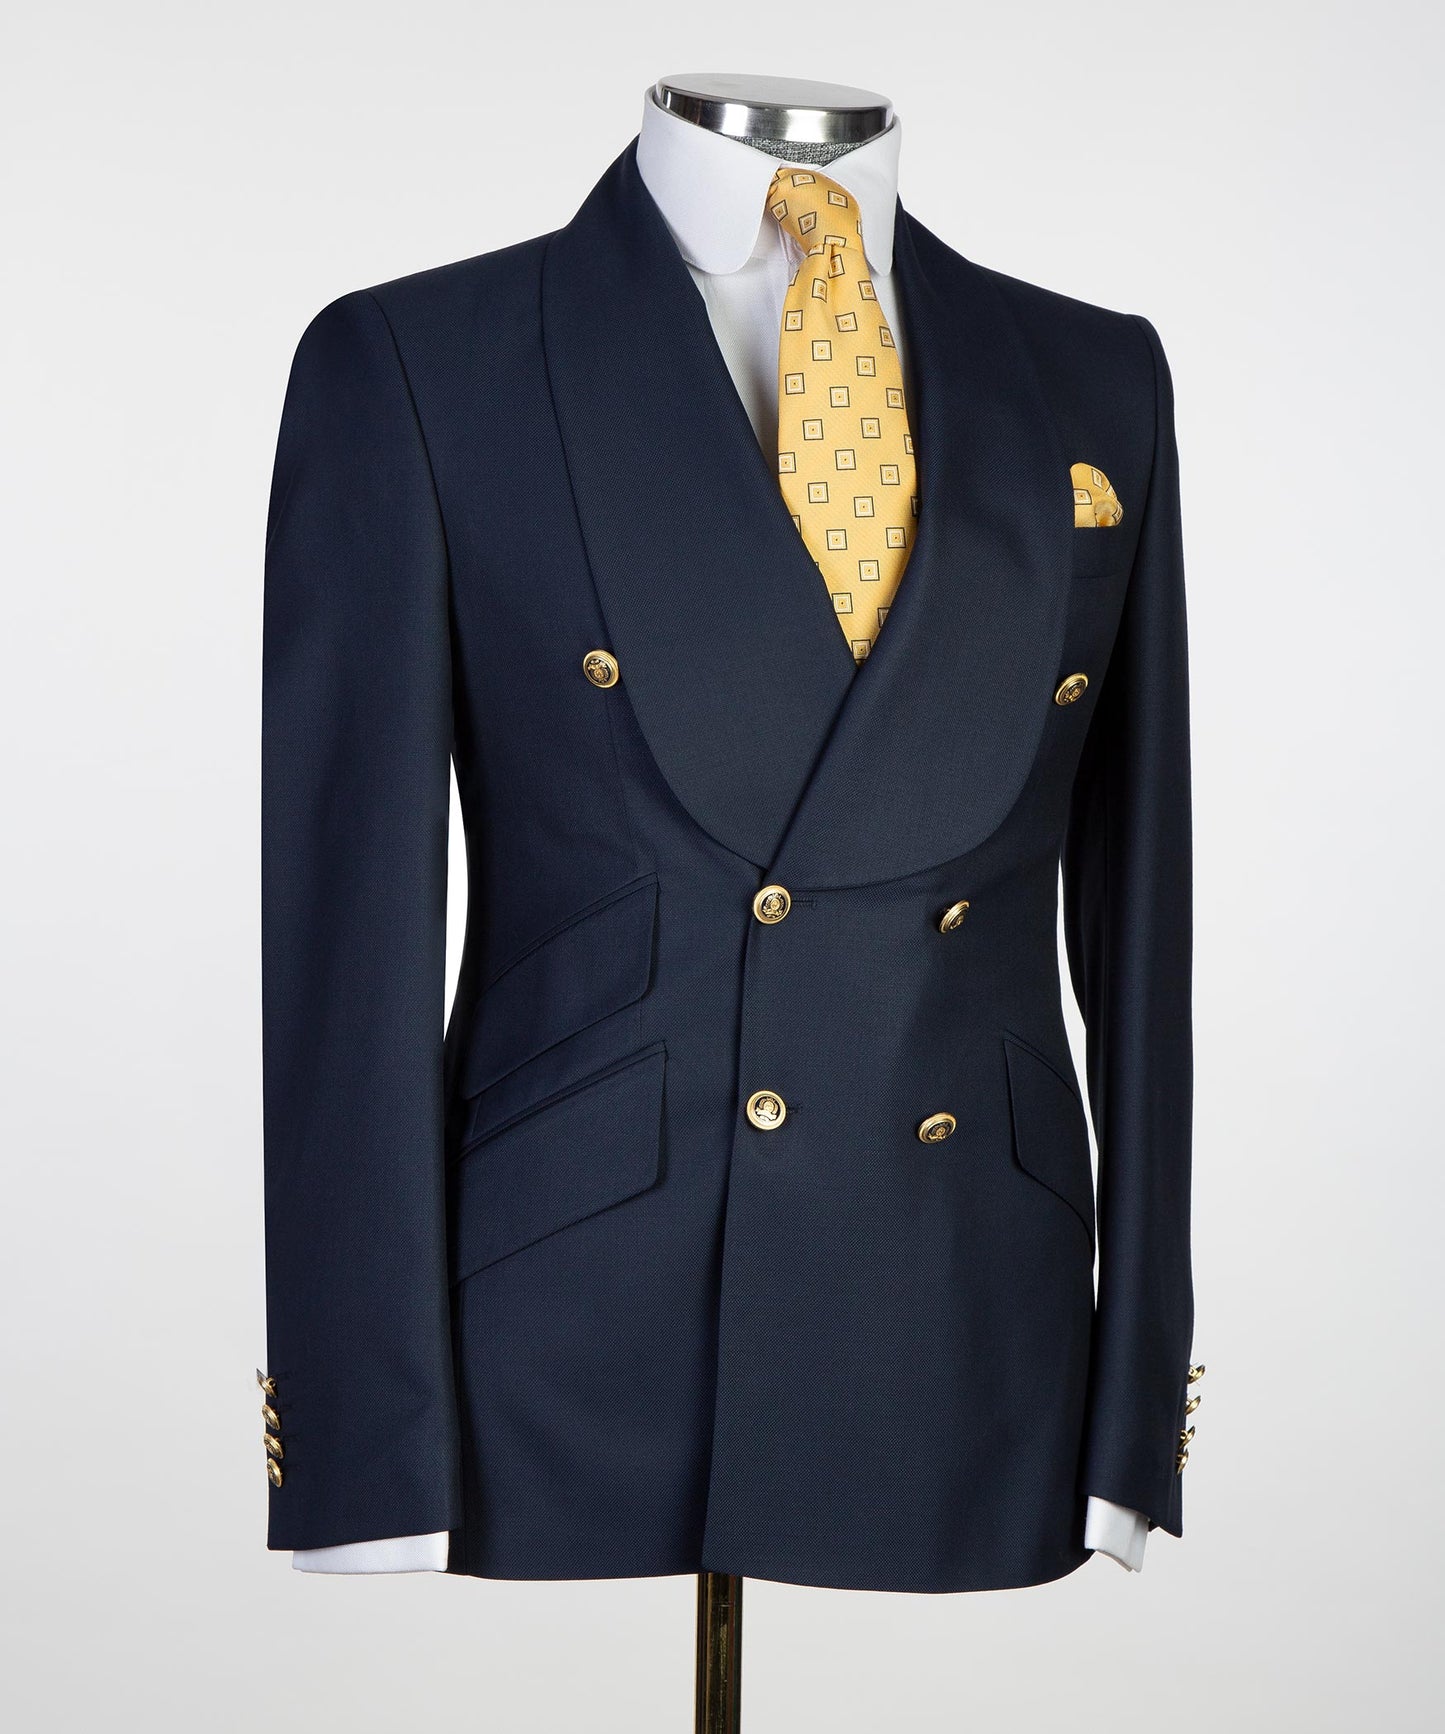 Men's 2 Piece Double Breasted Navy Tuxedo Suit Shawl Lapel